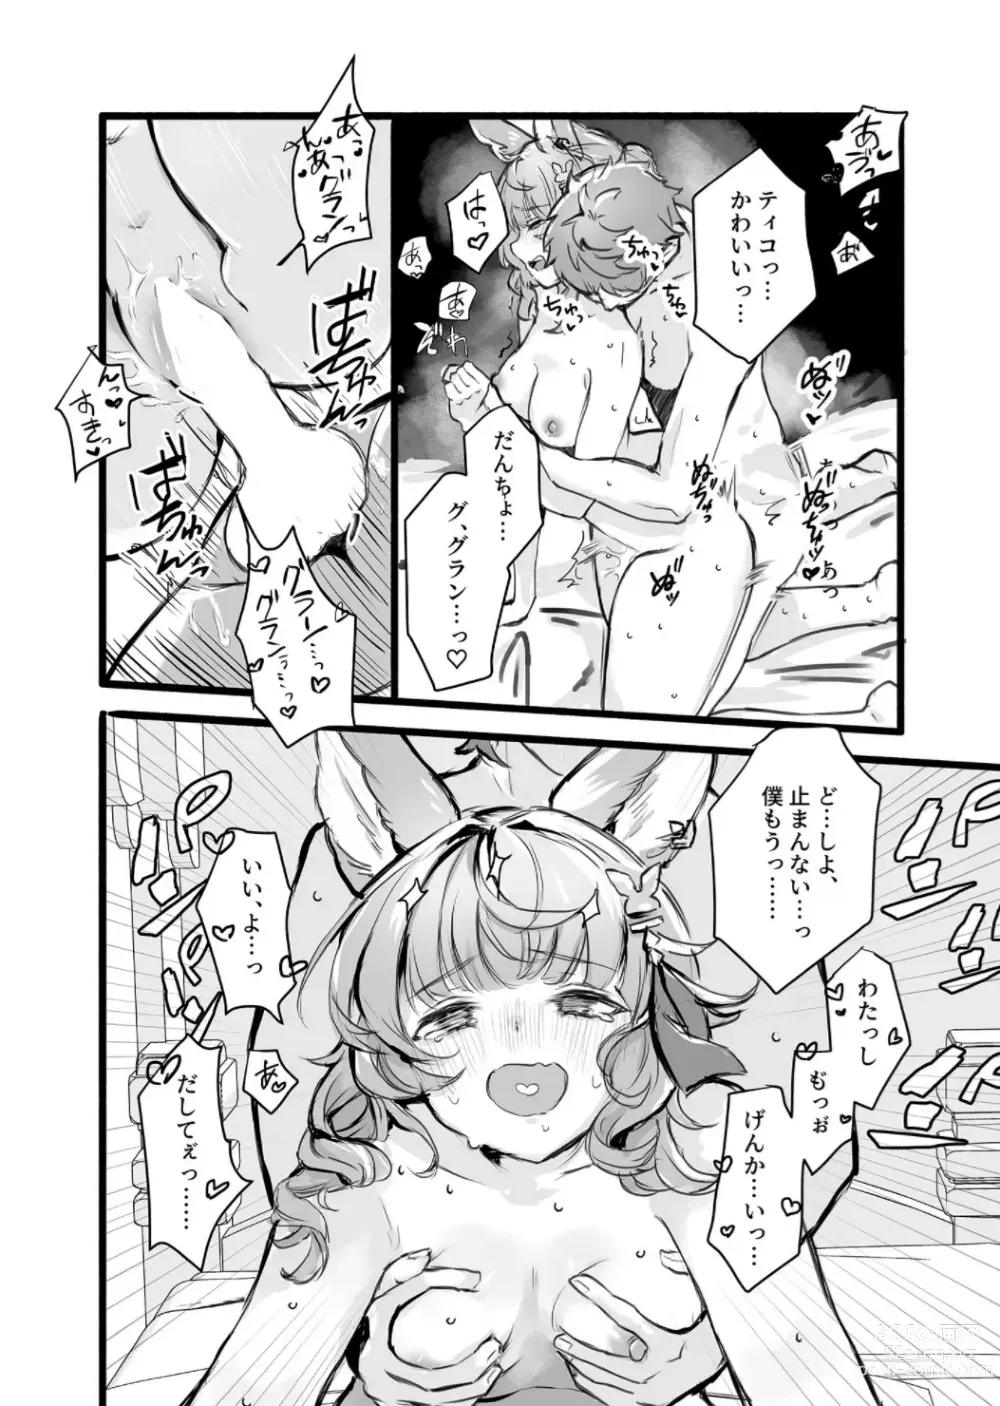 Page 19 of doujinshi Kore, Nani ka Shitteru?